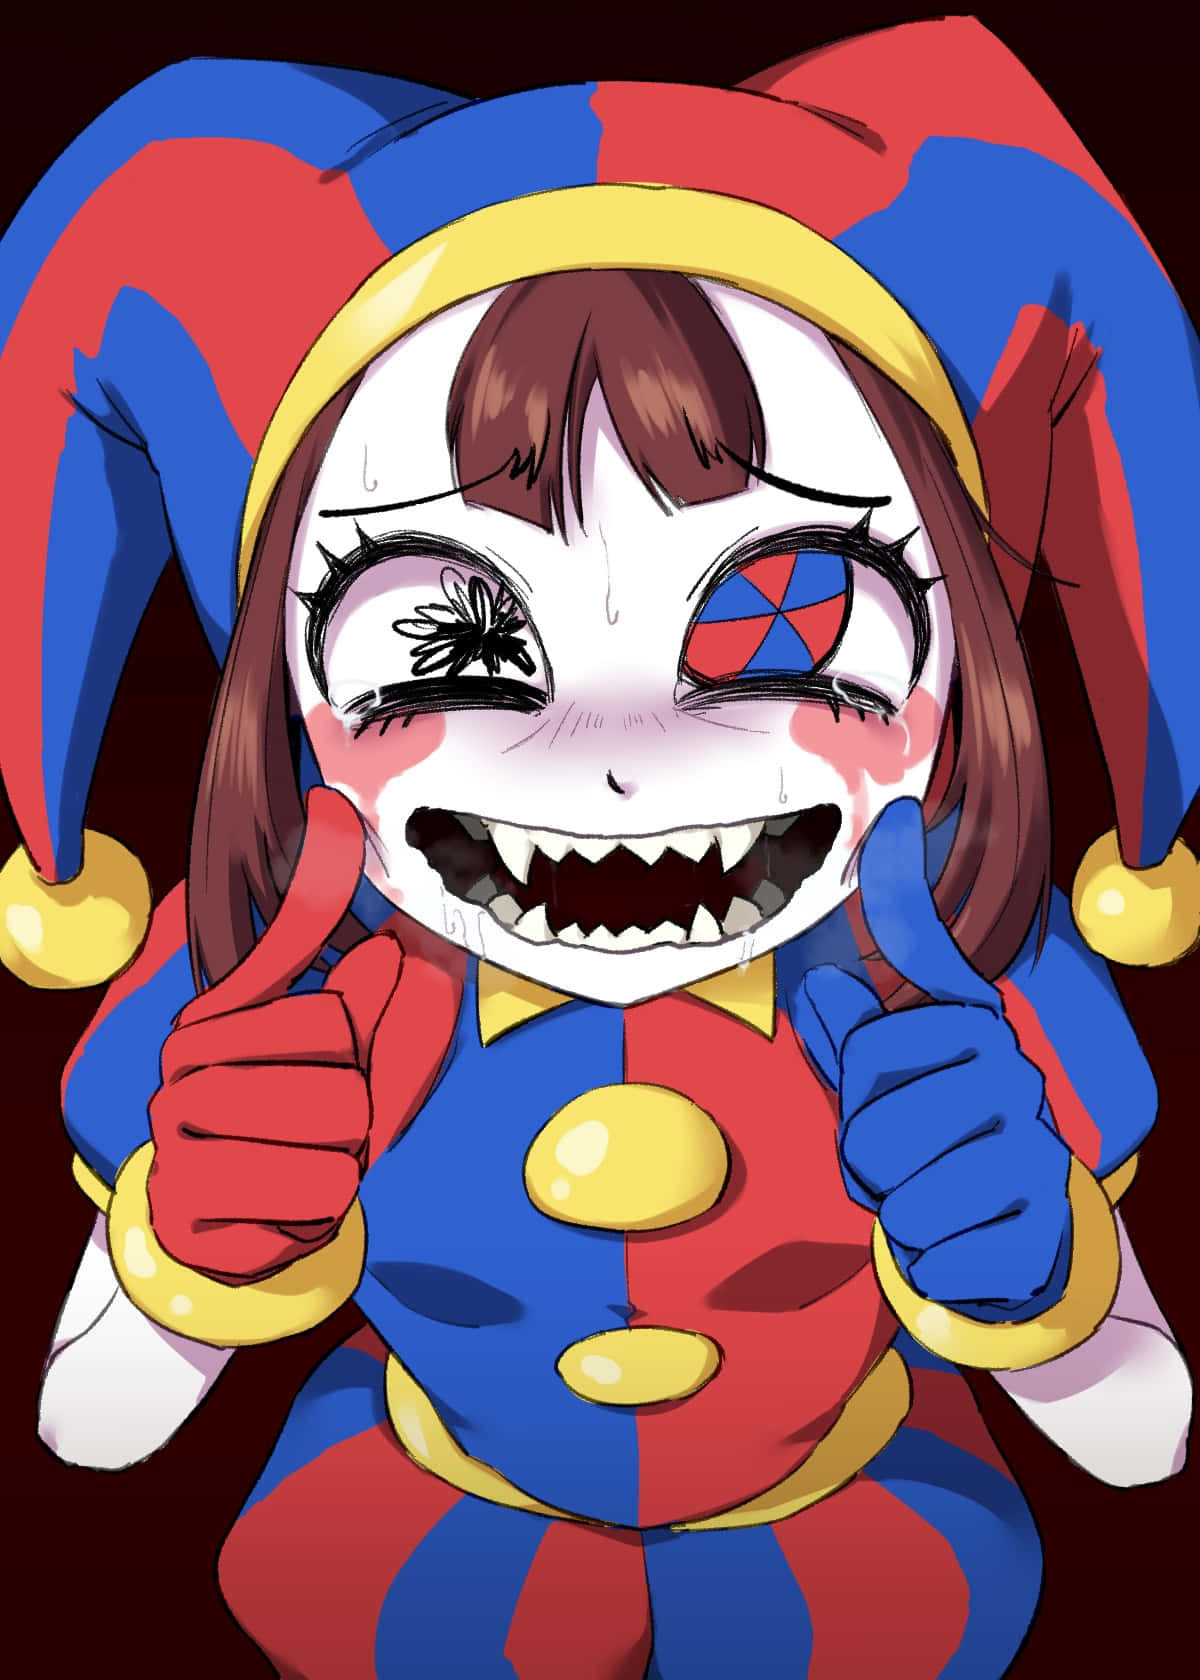 Creepy Clown Girl Illustration Wallpaper